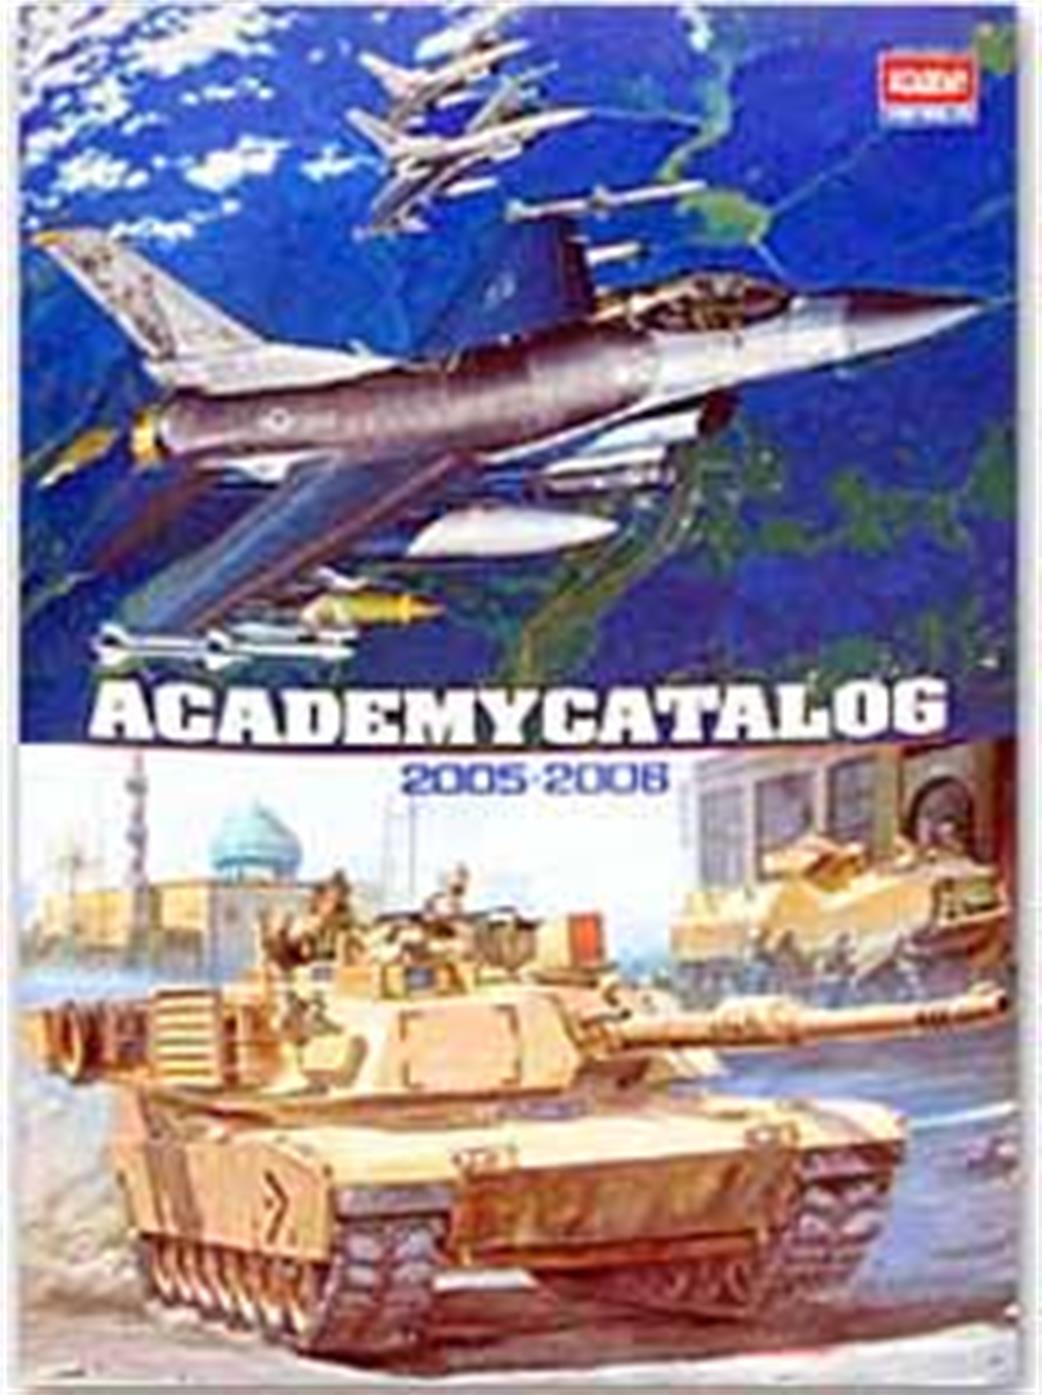 Academy 11005 Catalogue 2005/06